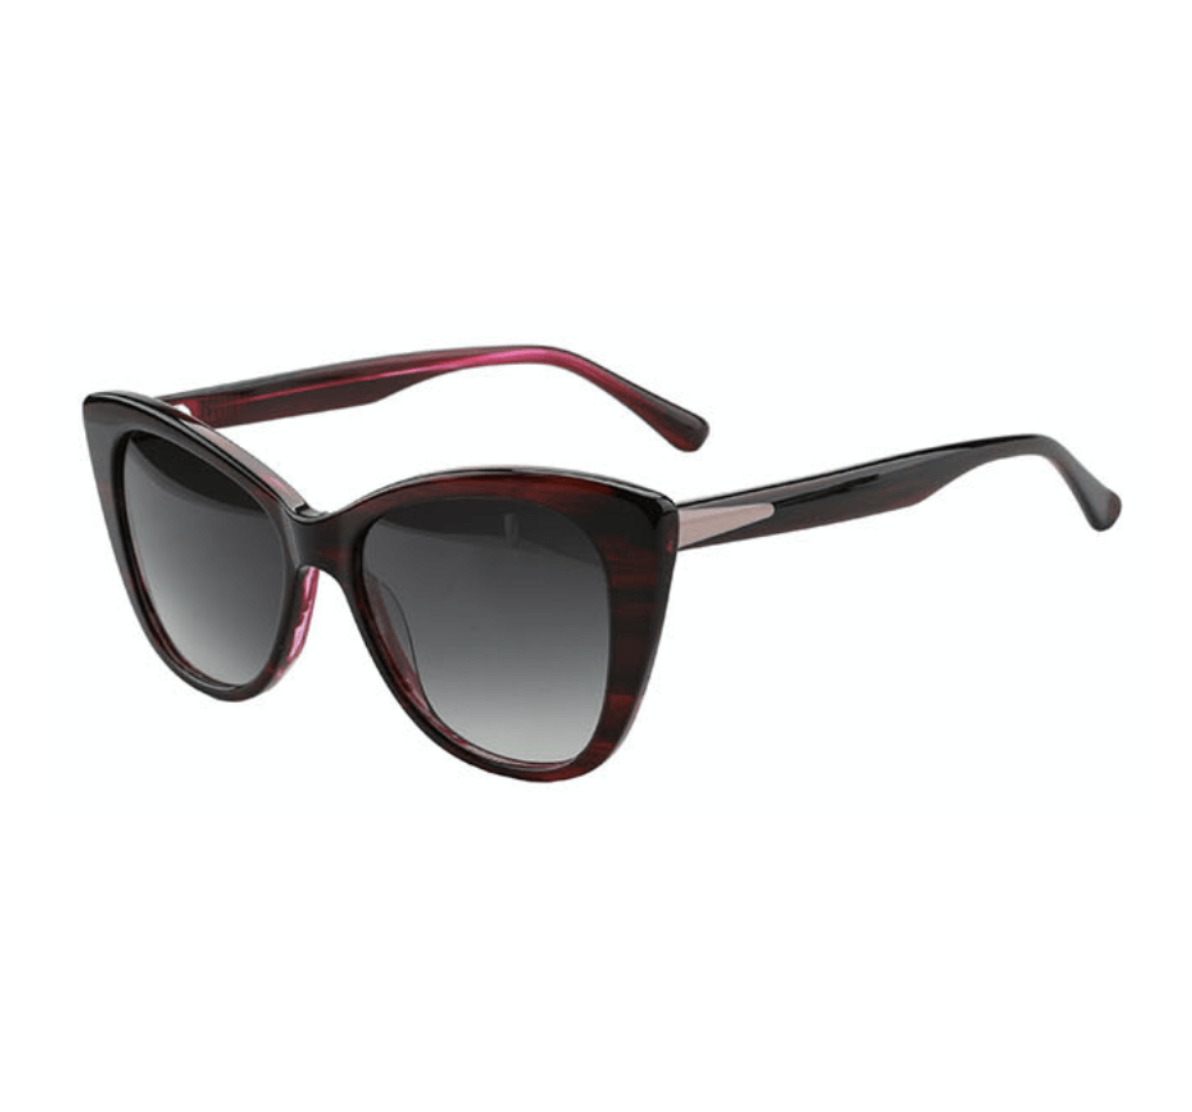 cat eye sunglasses wholesale, oversized cat eye glasses, wholesale sunglasses supplier, Wholesale sunglasses vendors